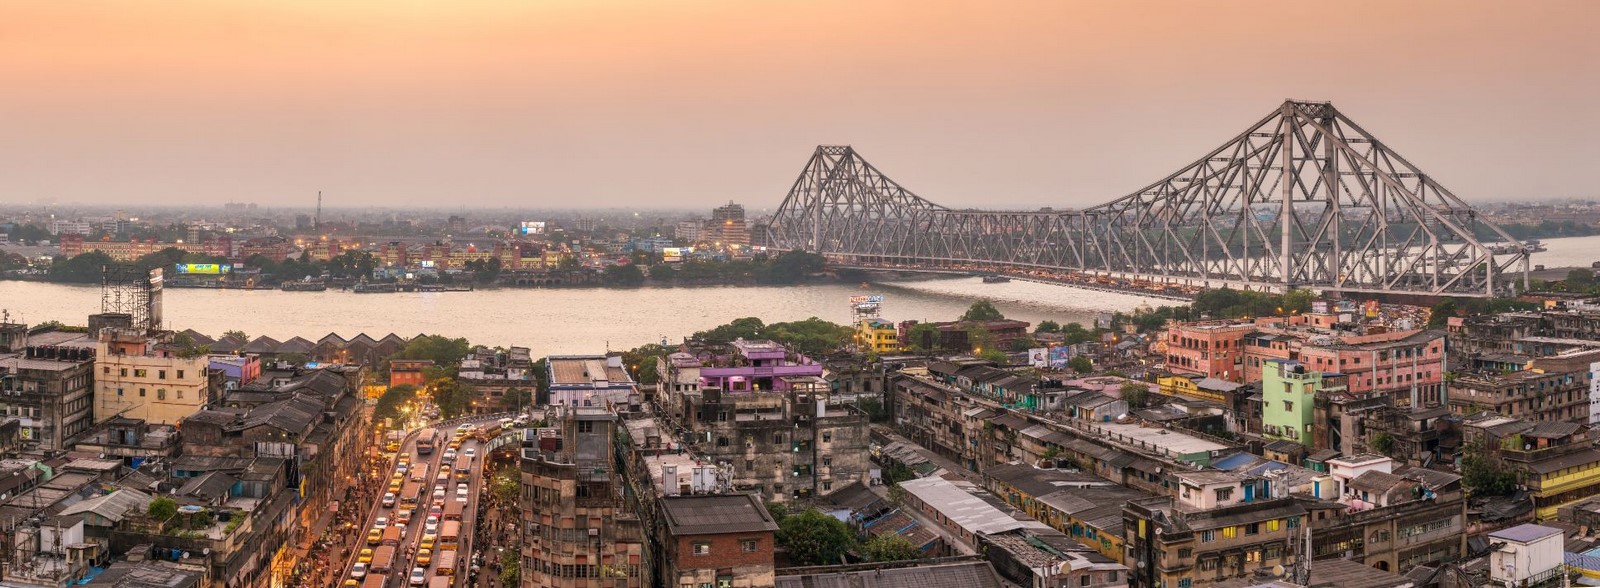 Suburbanization In Kolkata - Sheet2